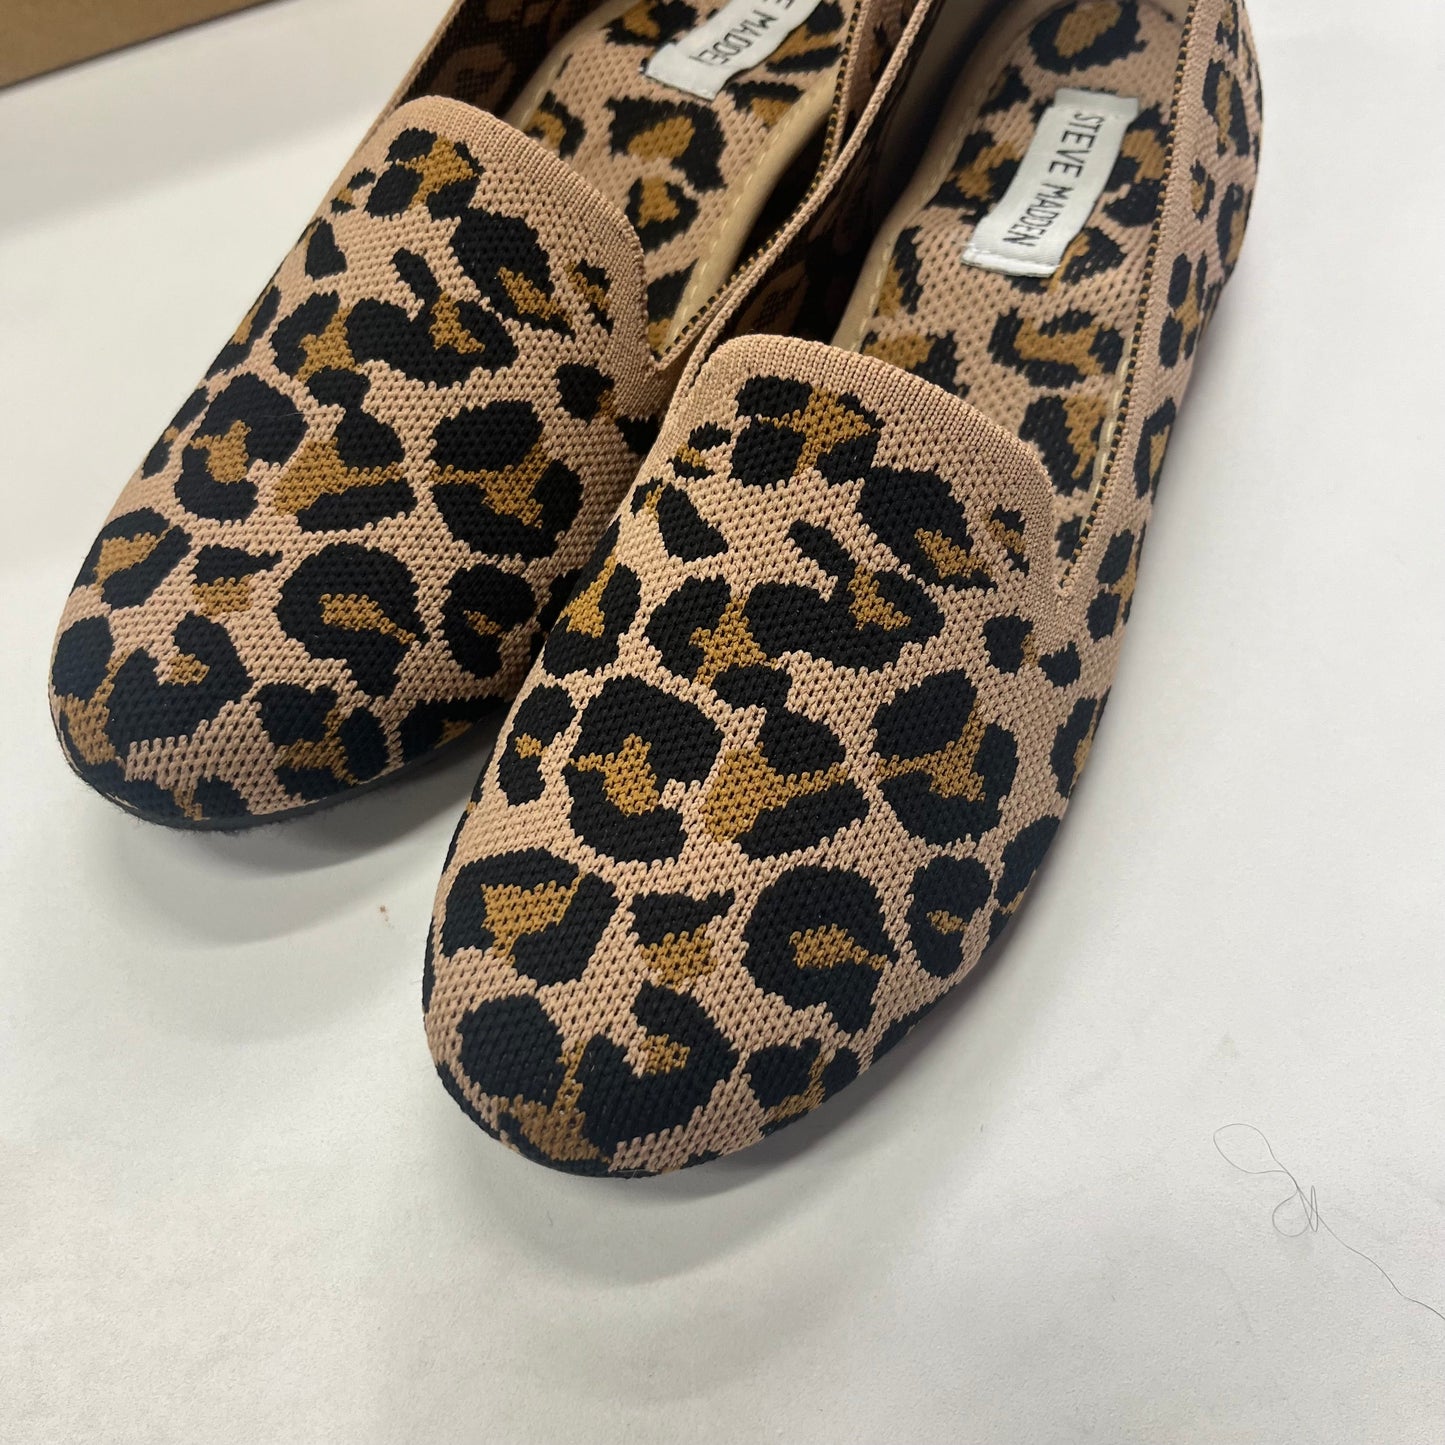 Animal Print Shoes Flats Loafer Oxford Steve Madden, Size 6.5